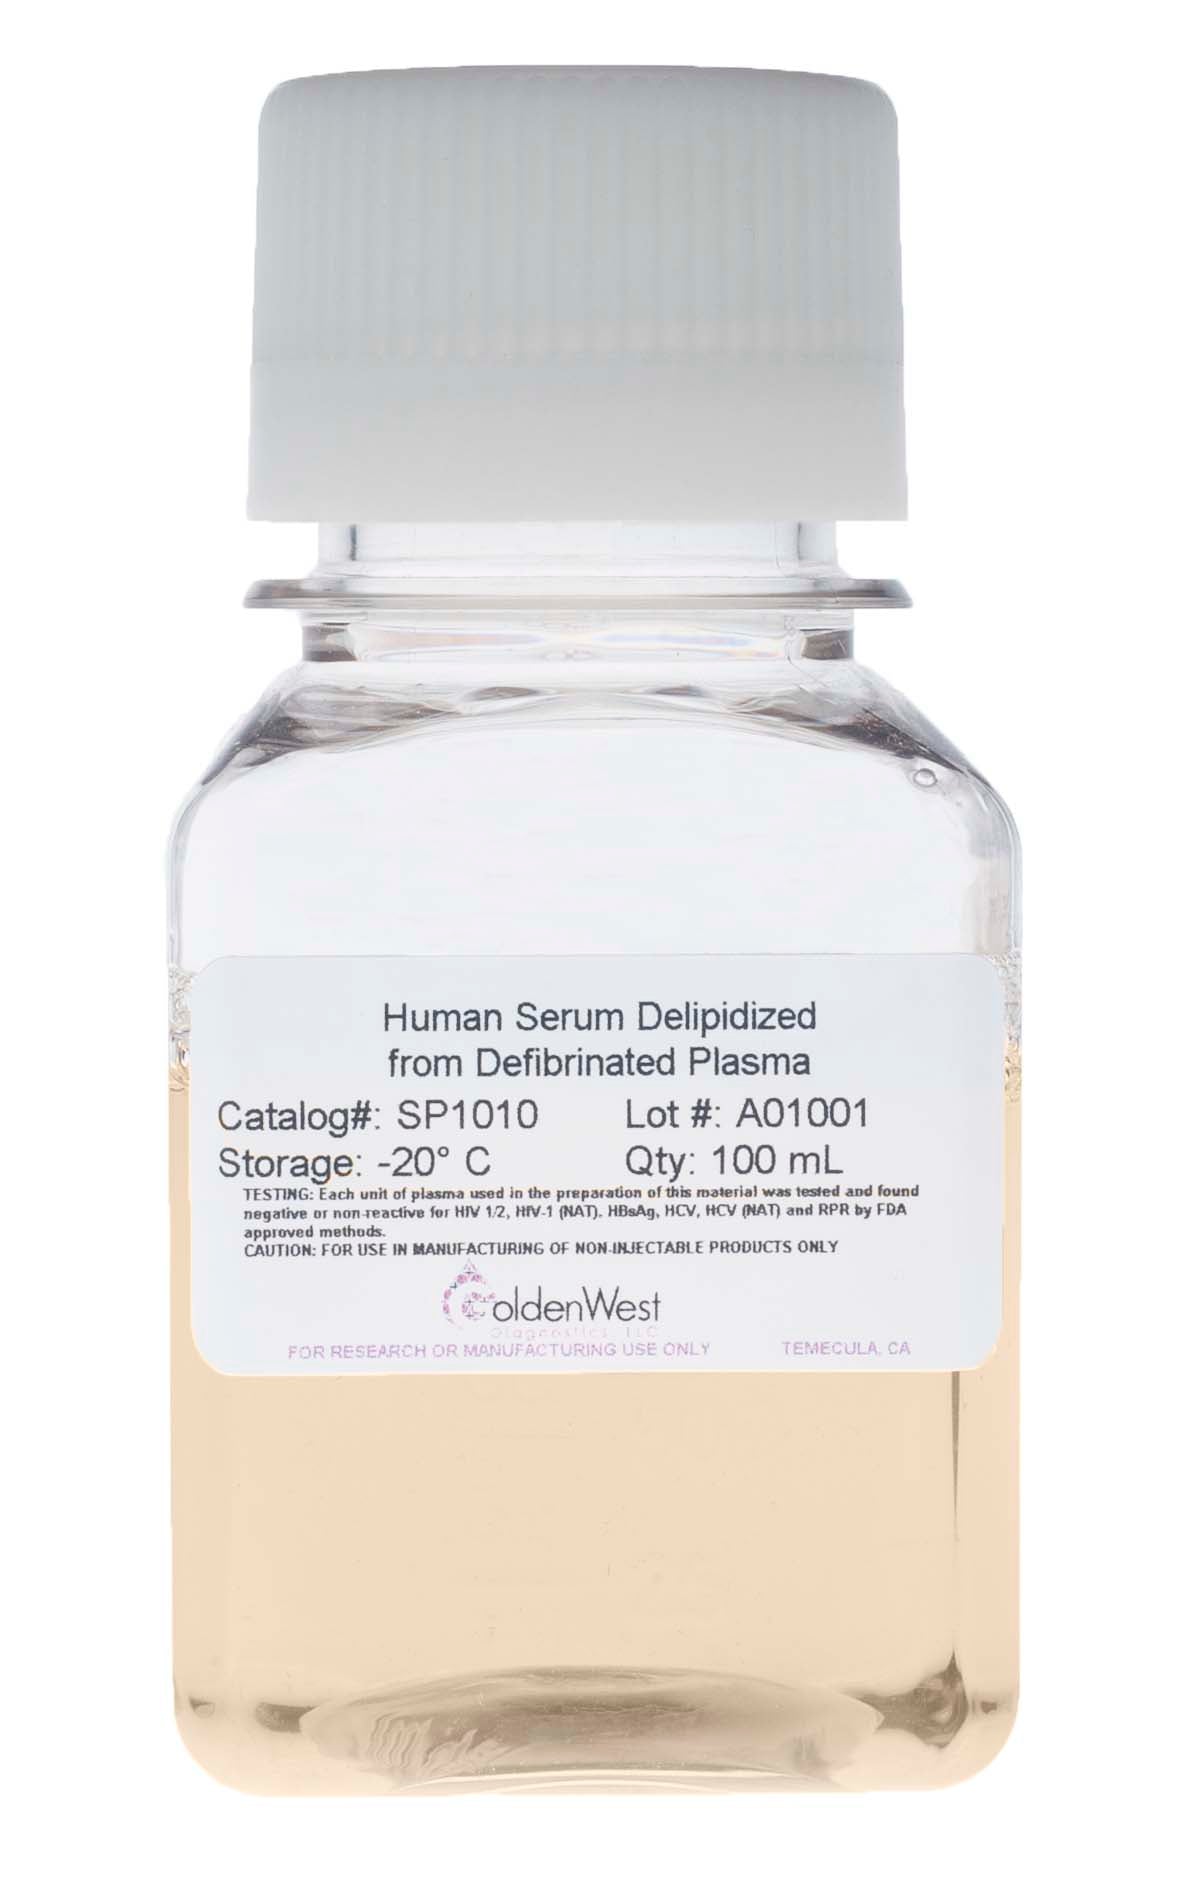 Human Serum Delipidized from Defibrinated Plasma